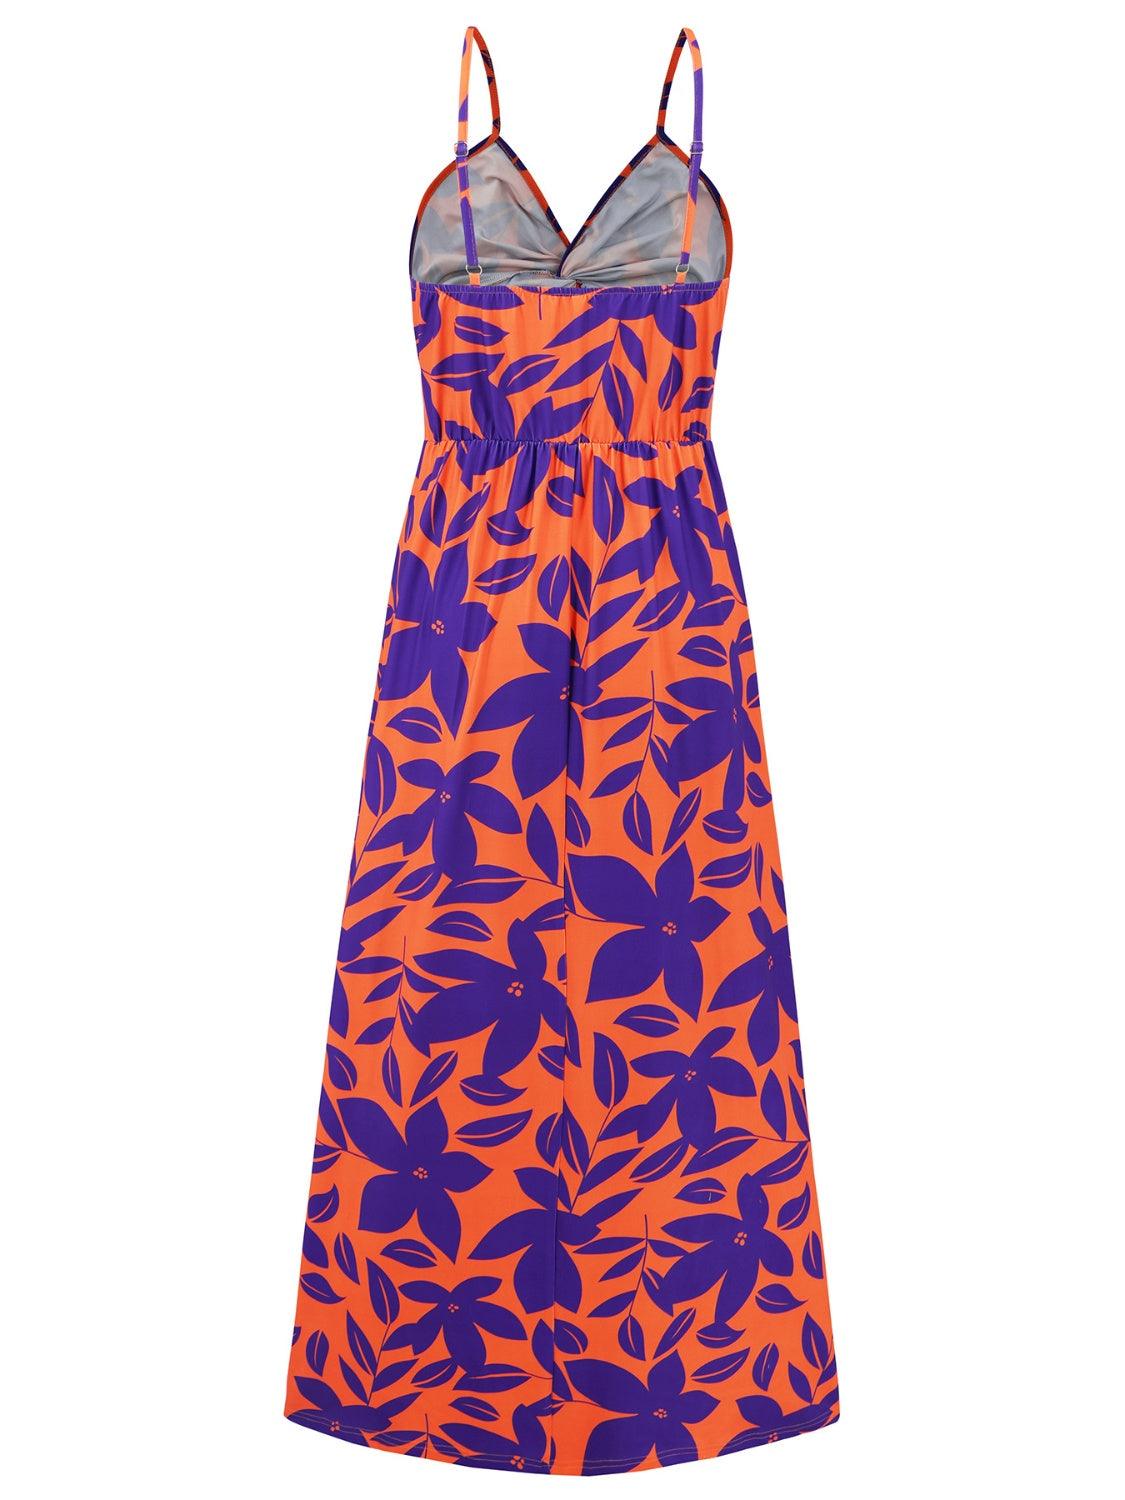 Bona Fide Fashion - Twisted Printed V-Neck Cami Dress - Women Fashion - Bona Fide Fashion